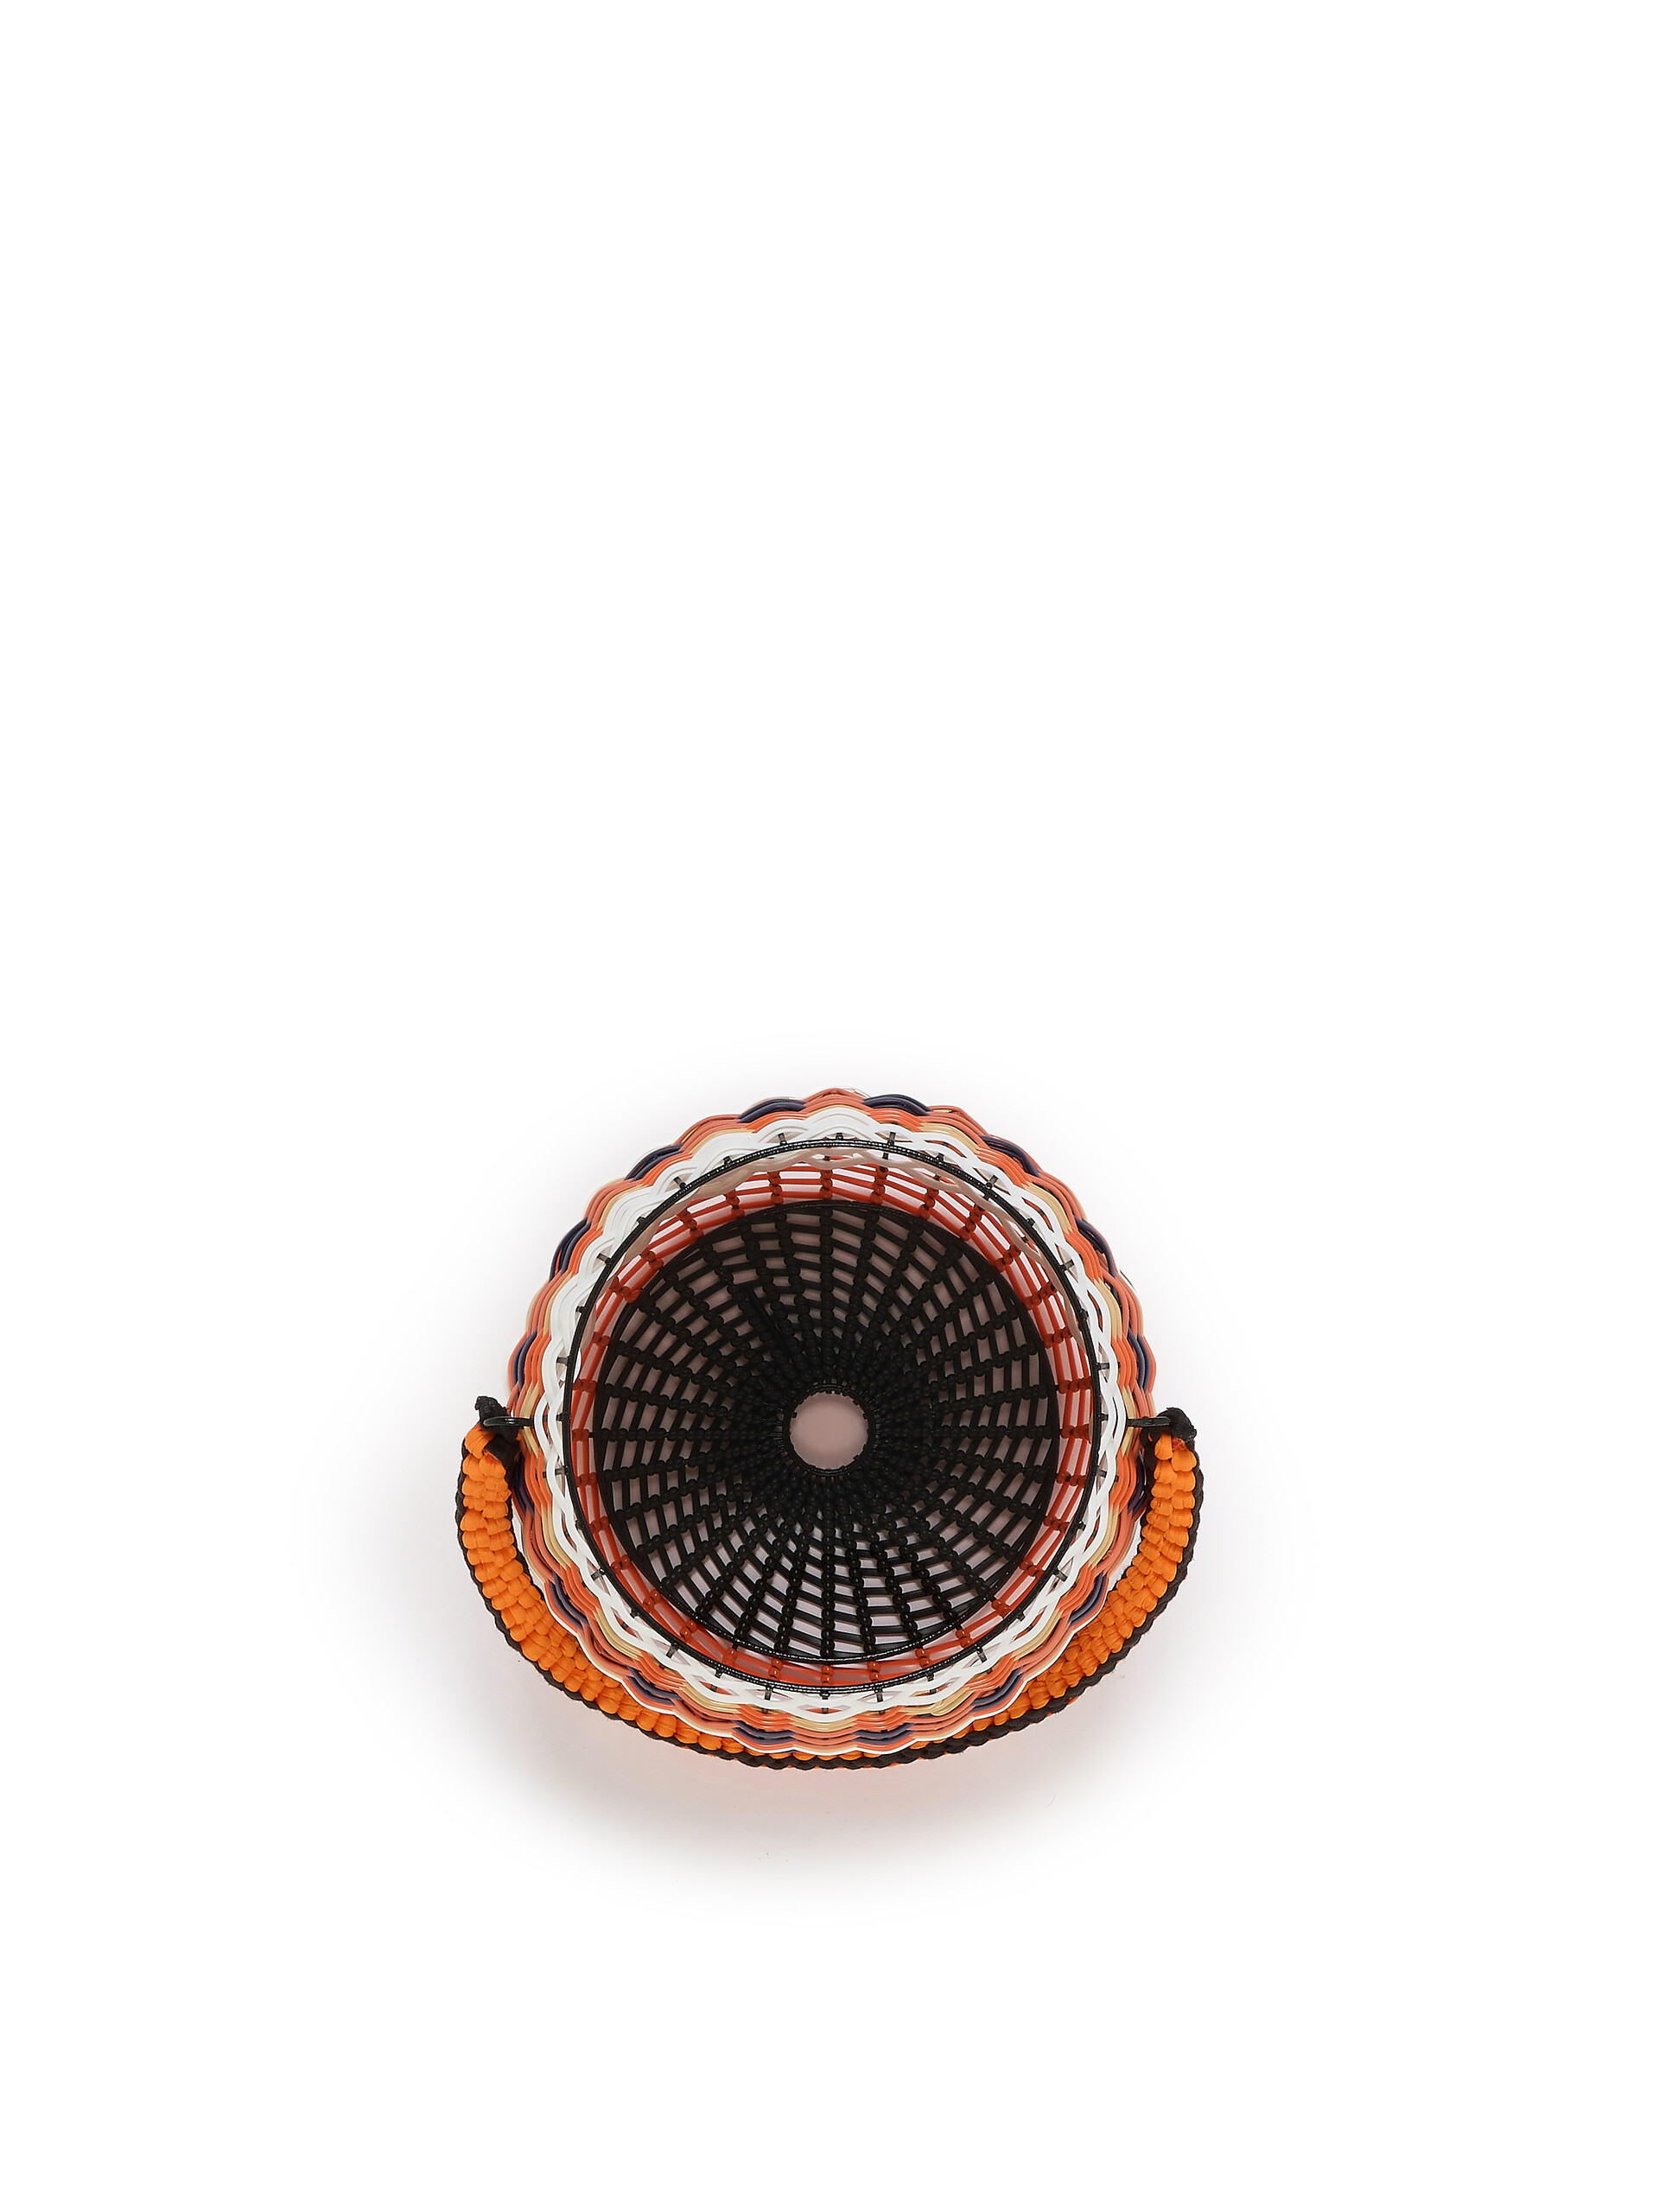 Orange and white MARNI MARKET woven cable basket - Accessories - Image 4